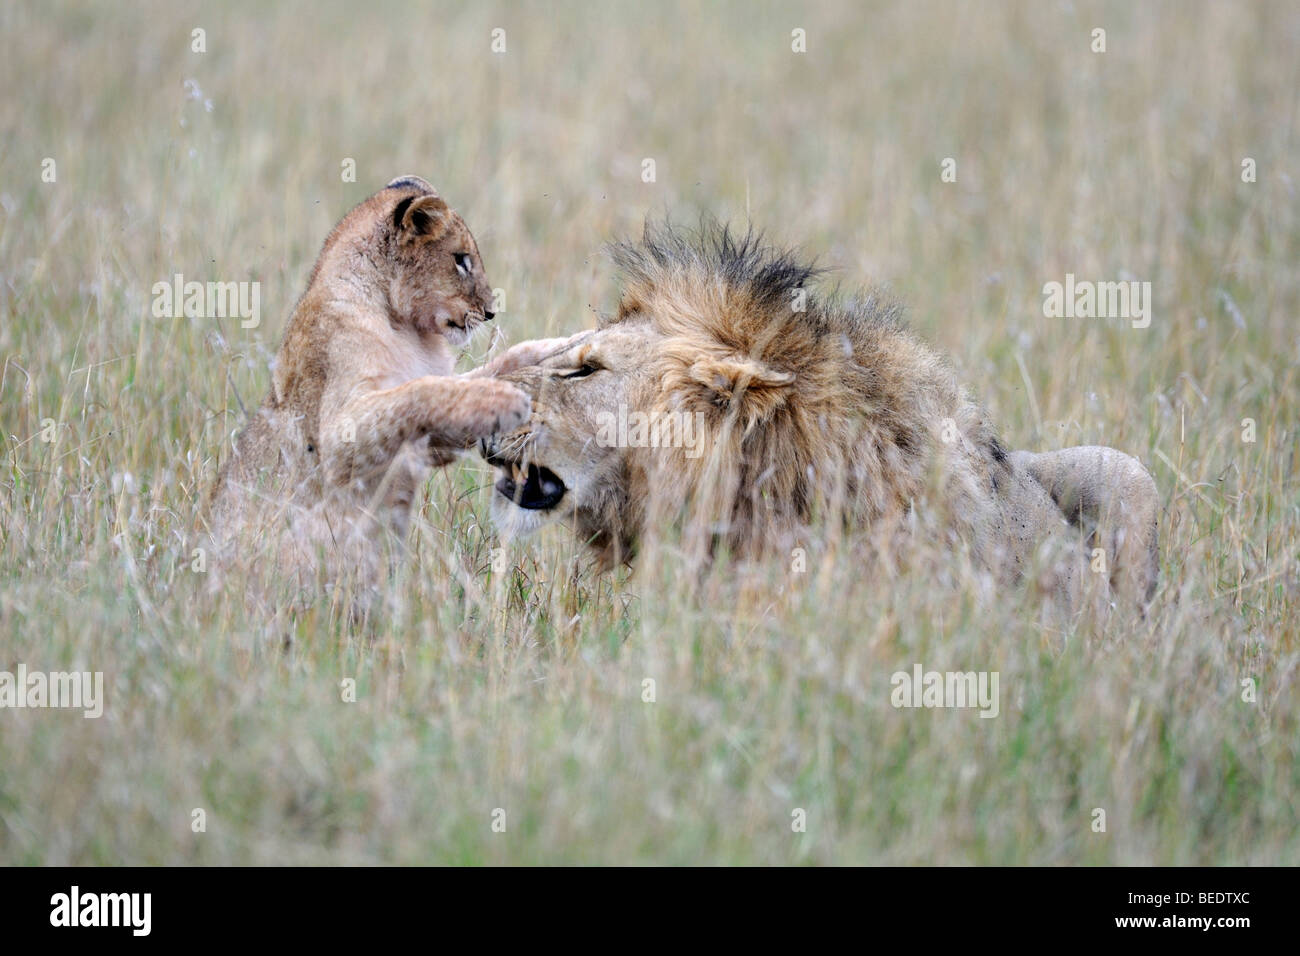 Lion (Panthera leo), maned lion playing with cub, Masai Mara, national park, Kenya, East Africa Stock Photo